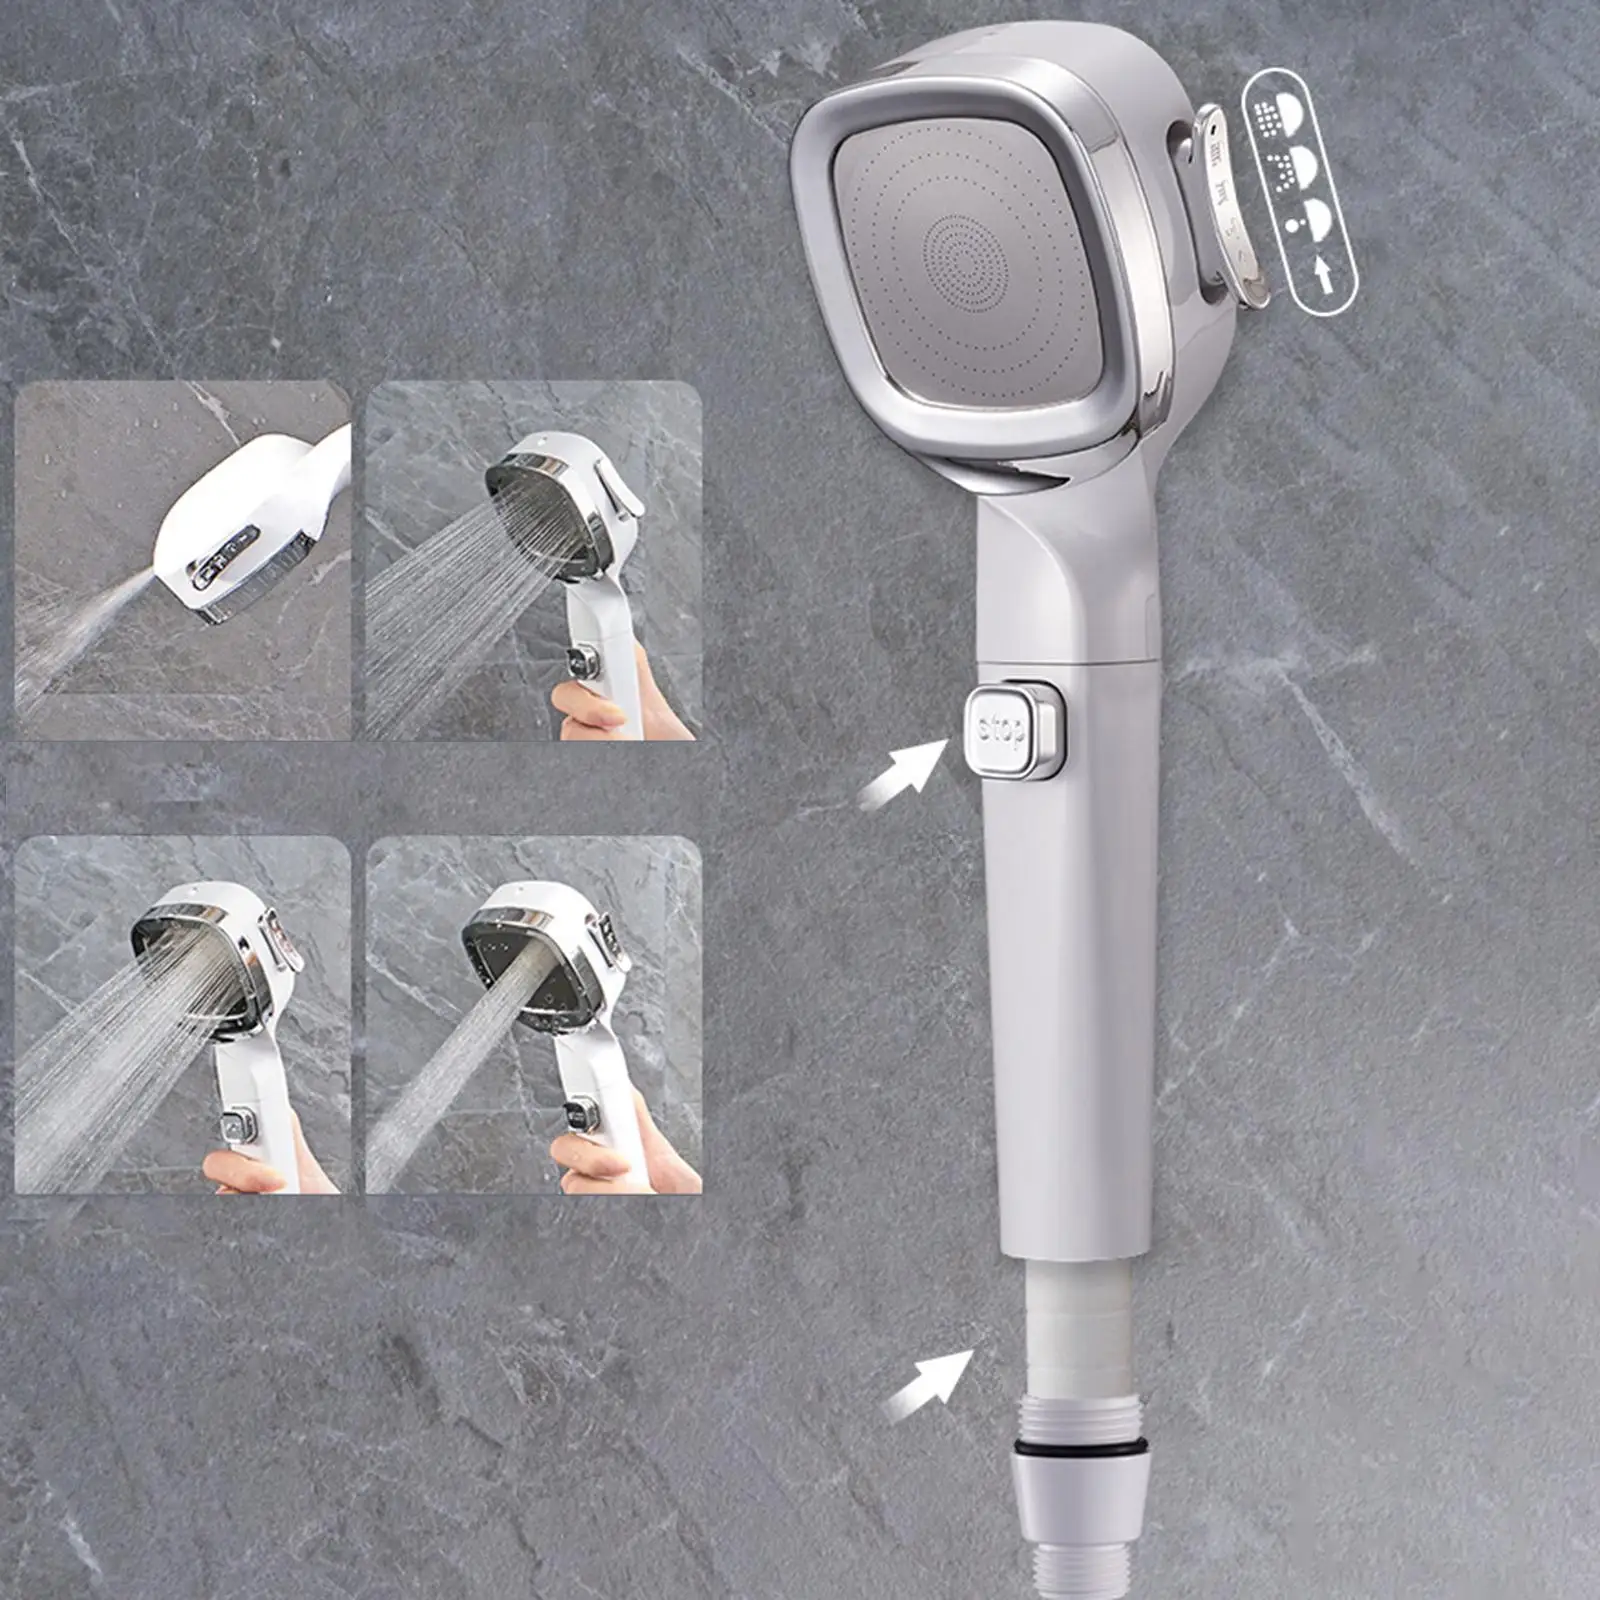 High Pressure Shower Heads 4 Modes Sprayer Handheld Spray Adjustable Nozzle for Spraying Bathroom Bathing SPA